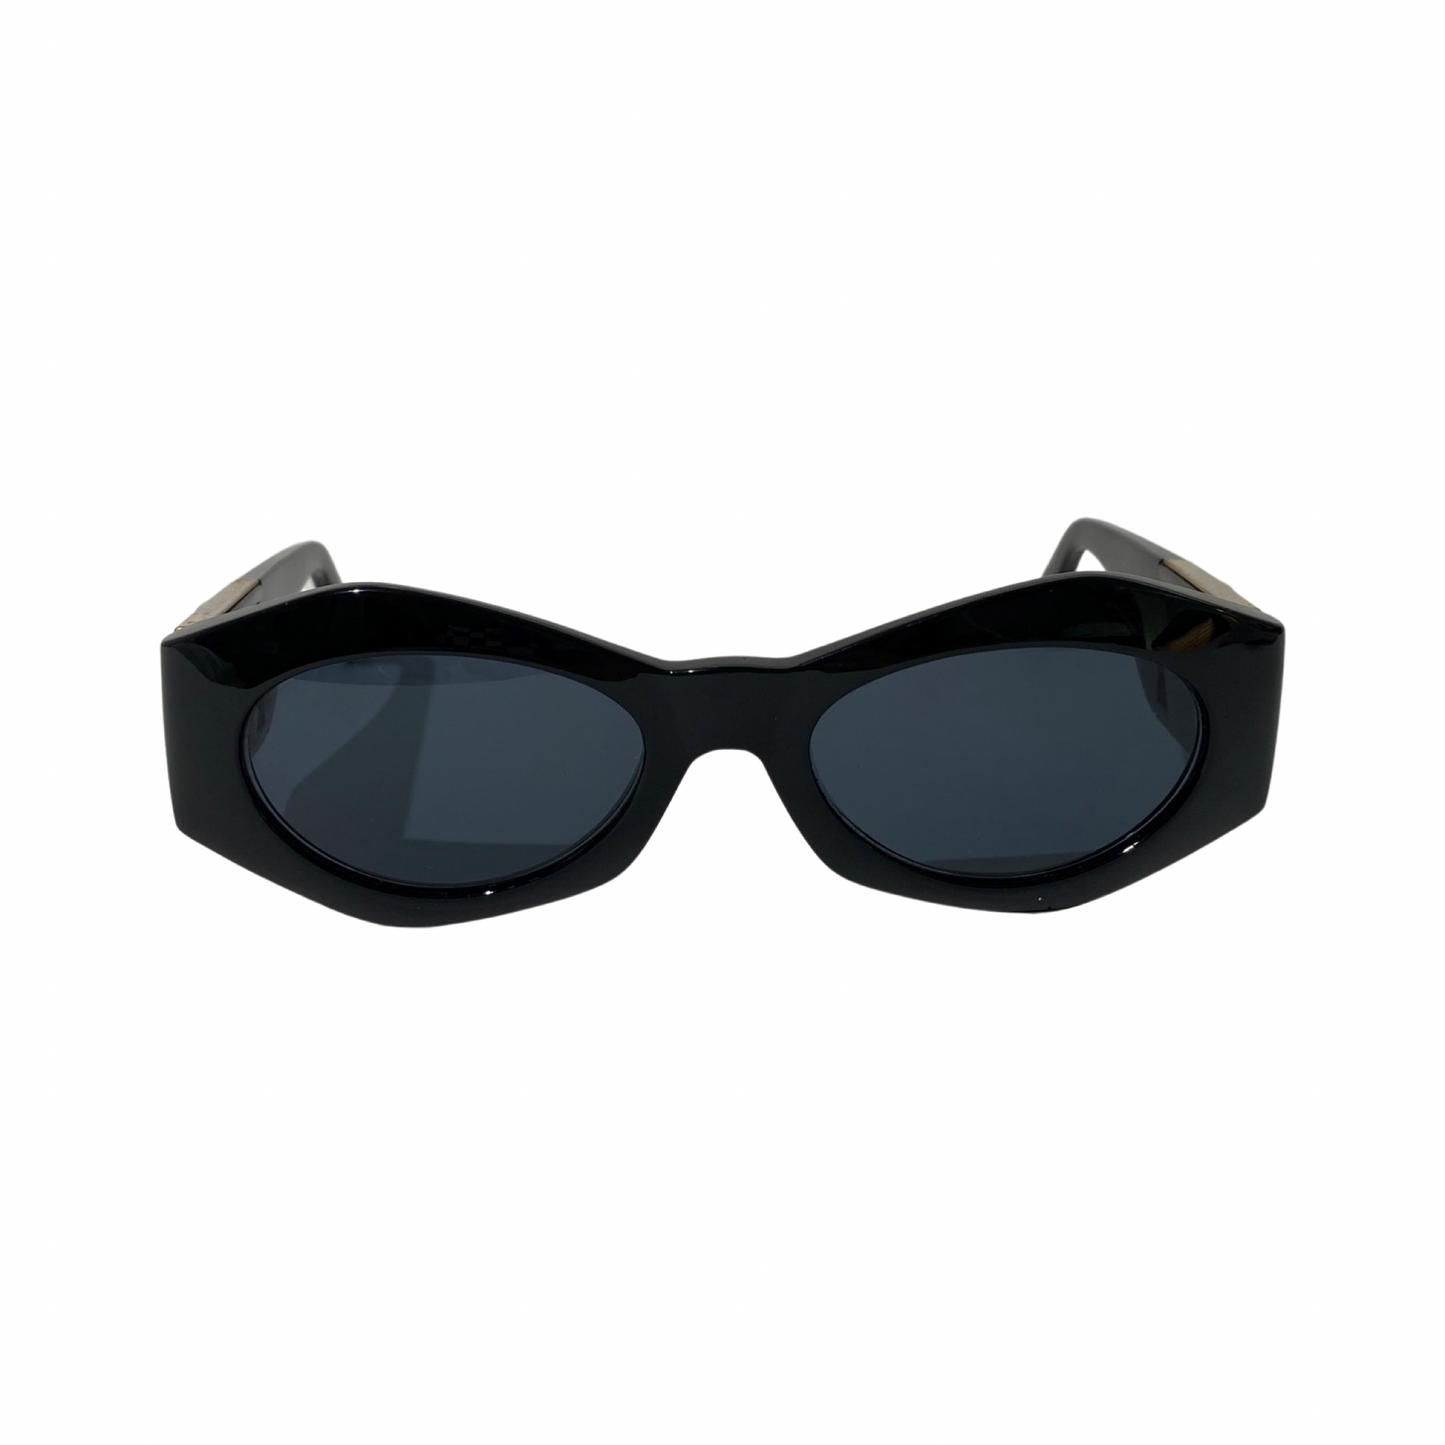 Gianni Versace 90s Black Gold Sunglasses